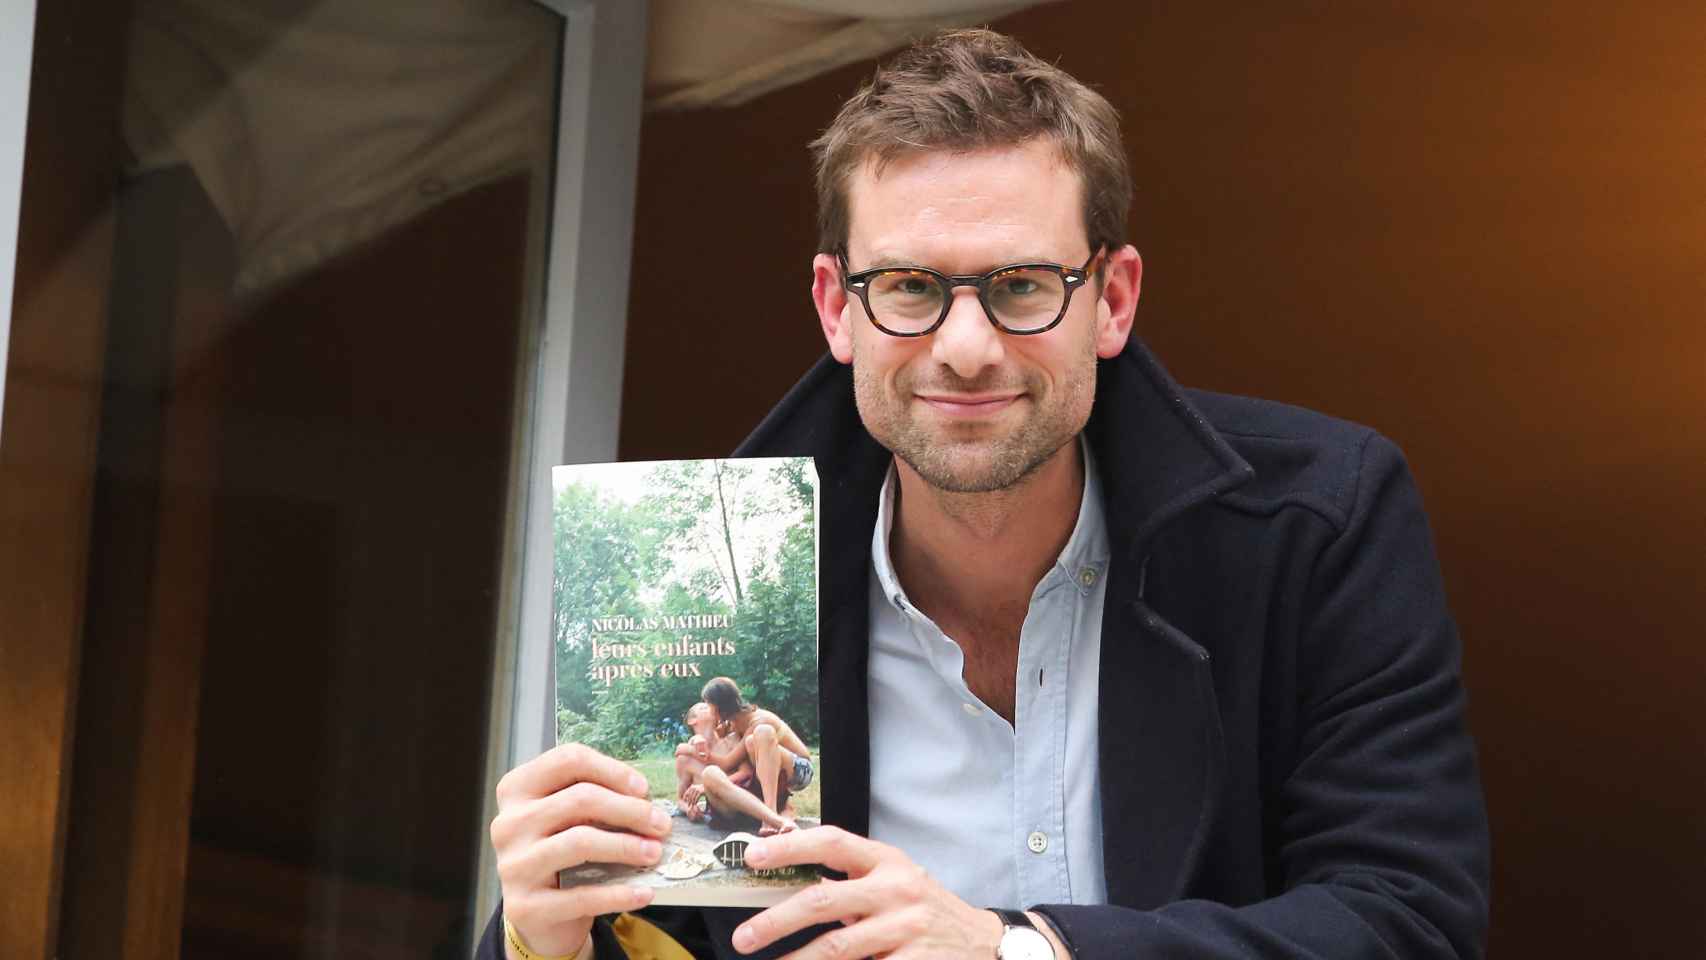 Nicolas Mathieu con su libro 'Leurs enfants  après eux', en 2018.